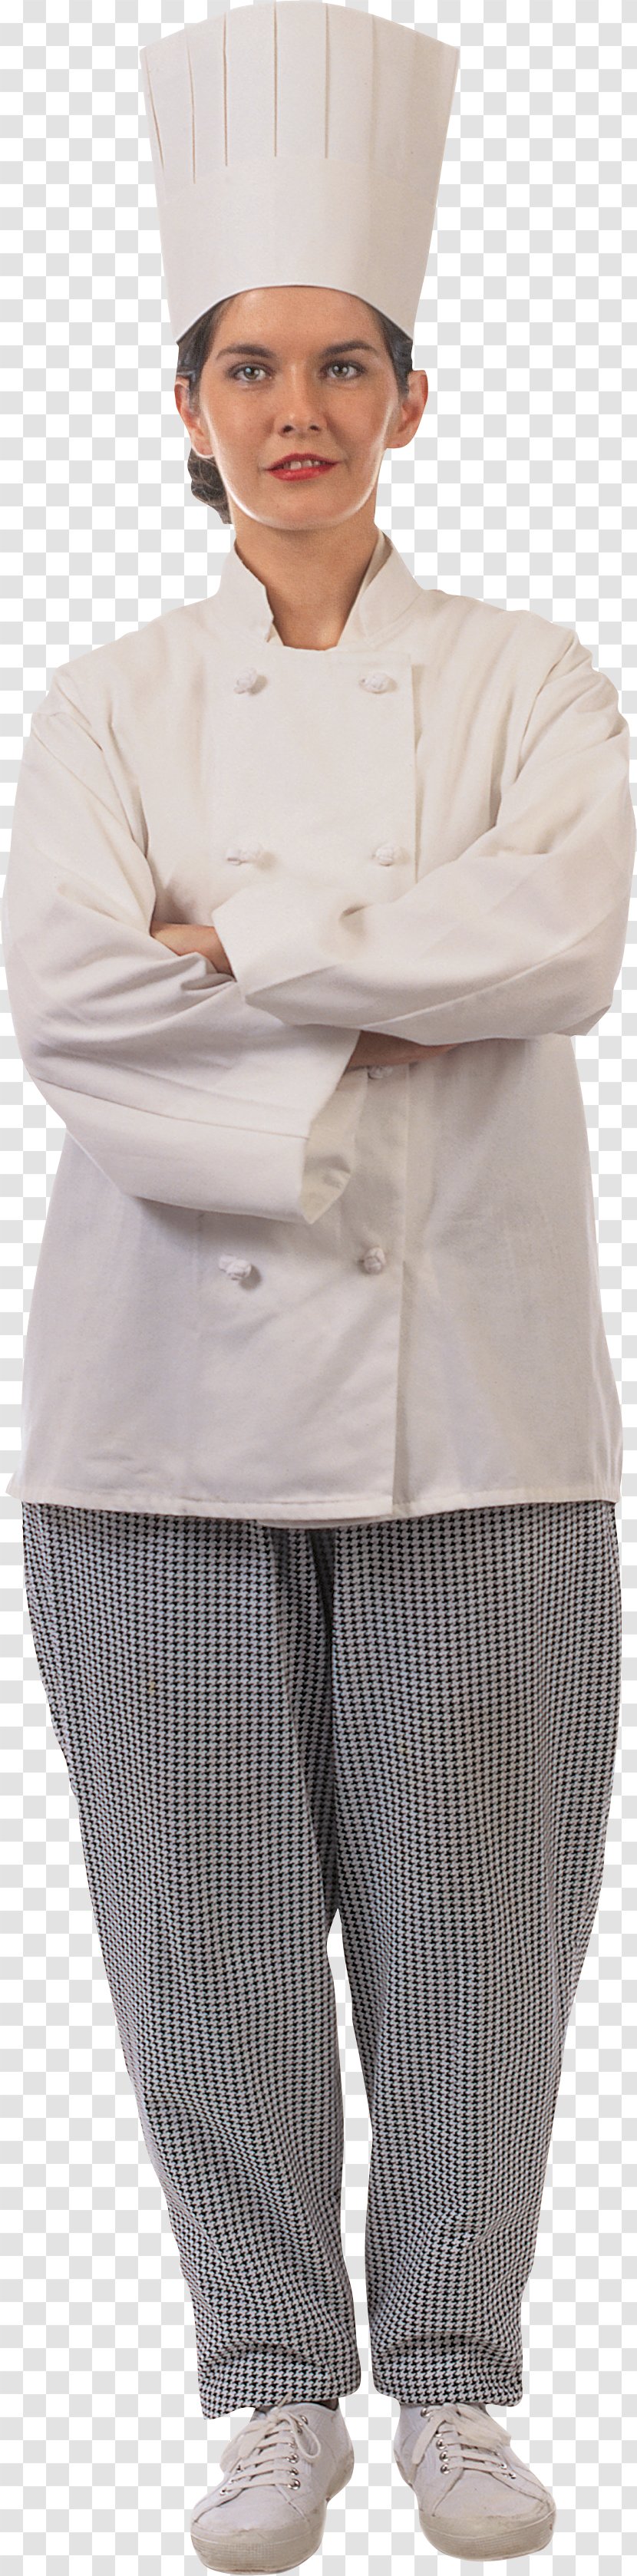 Chef's Uniform Woman Photography - Costume Transparent PNG